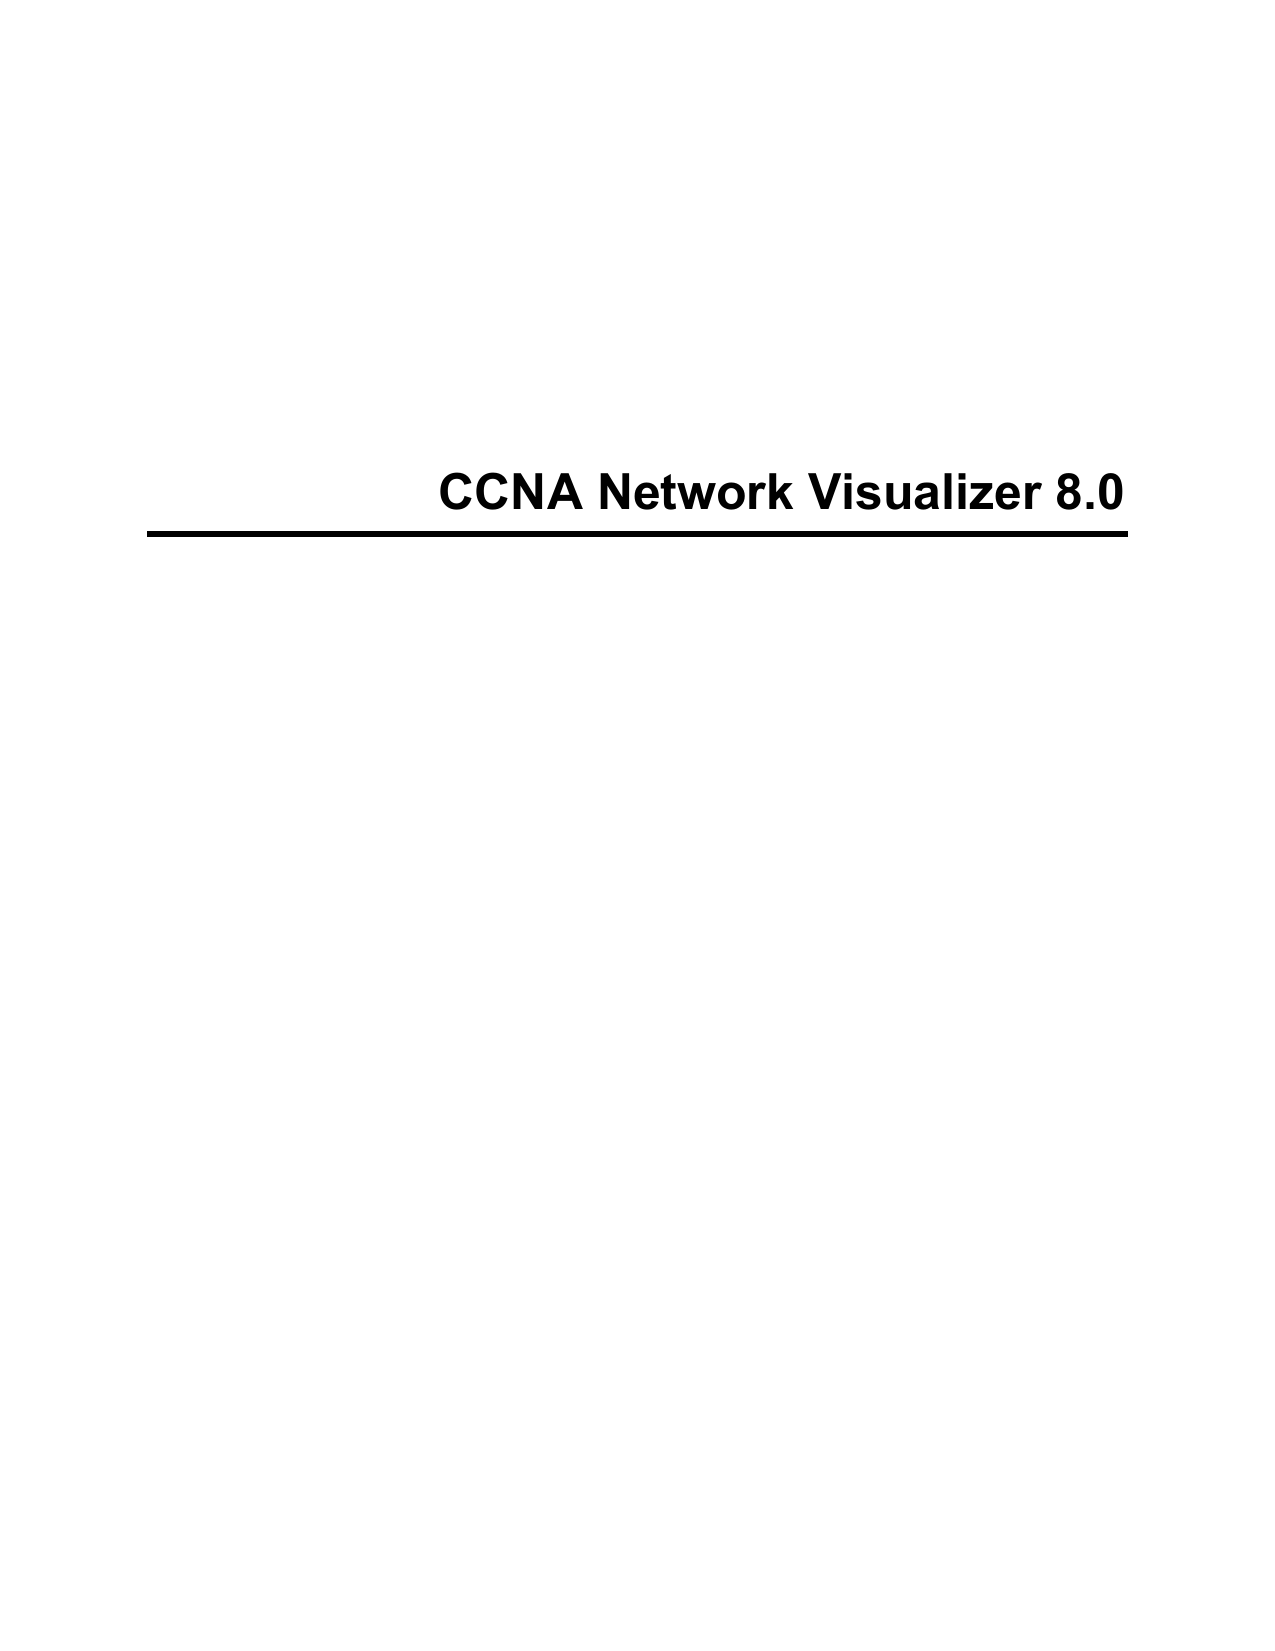 ccna network visualizer 8.0 crack